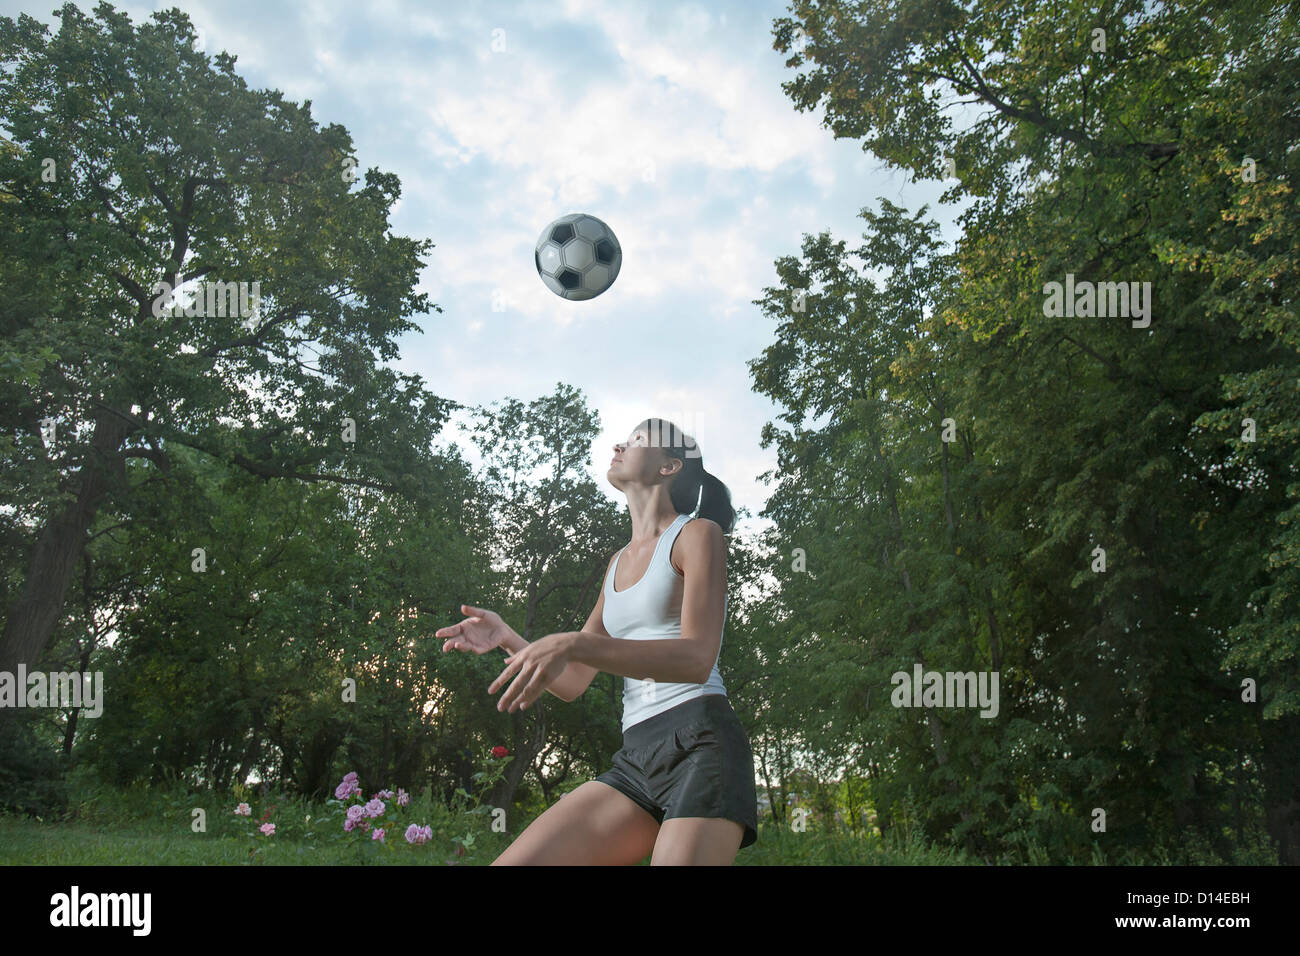 young woman practising football Stock Photo